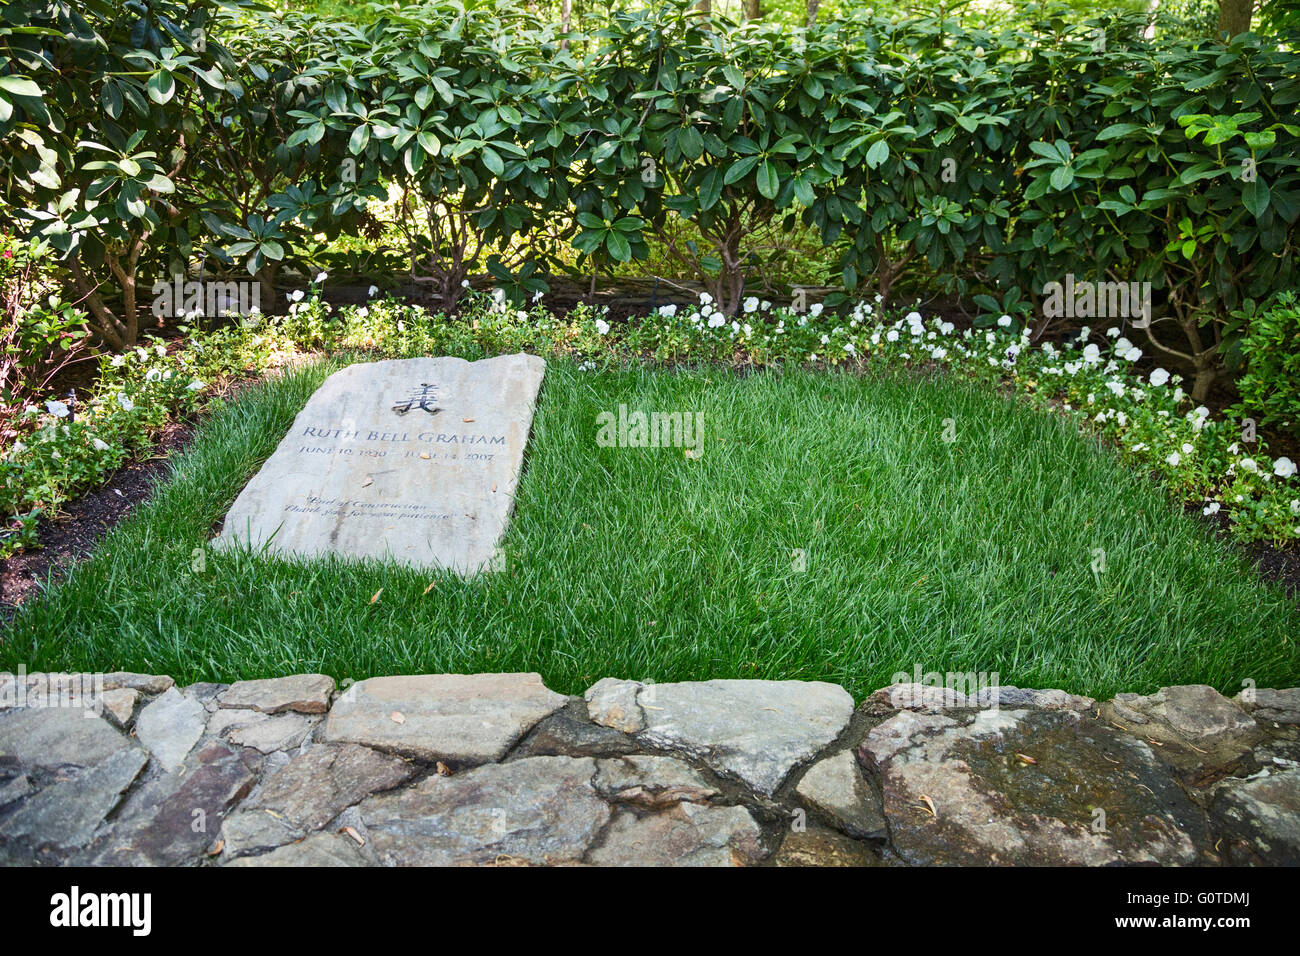 Charlotte, North Carolina - The grave of Ruth Bell Graham, wife of Billy Graham, at the Billy Graham Library. Stock Photo